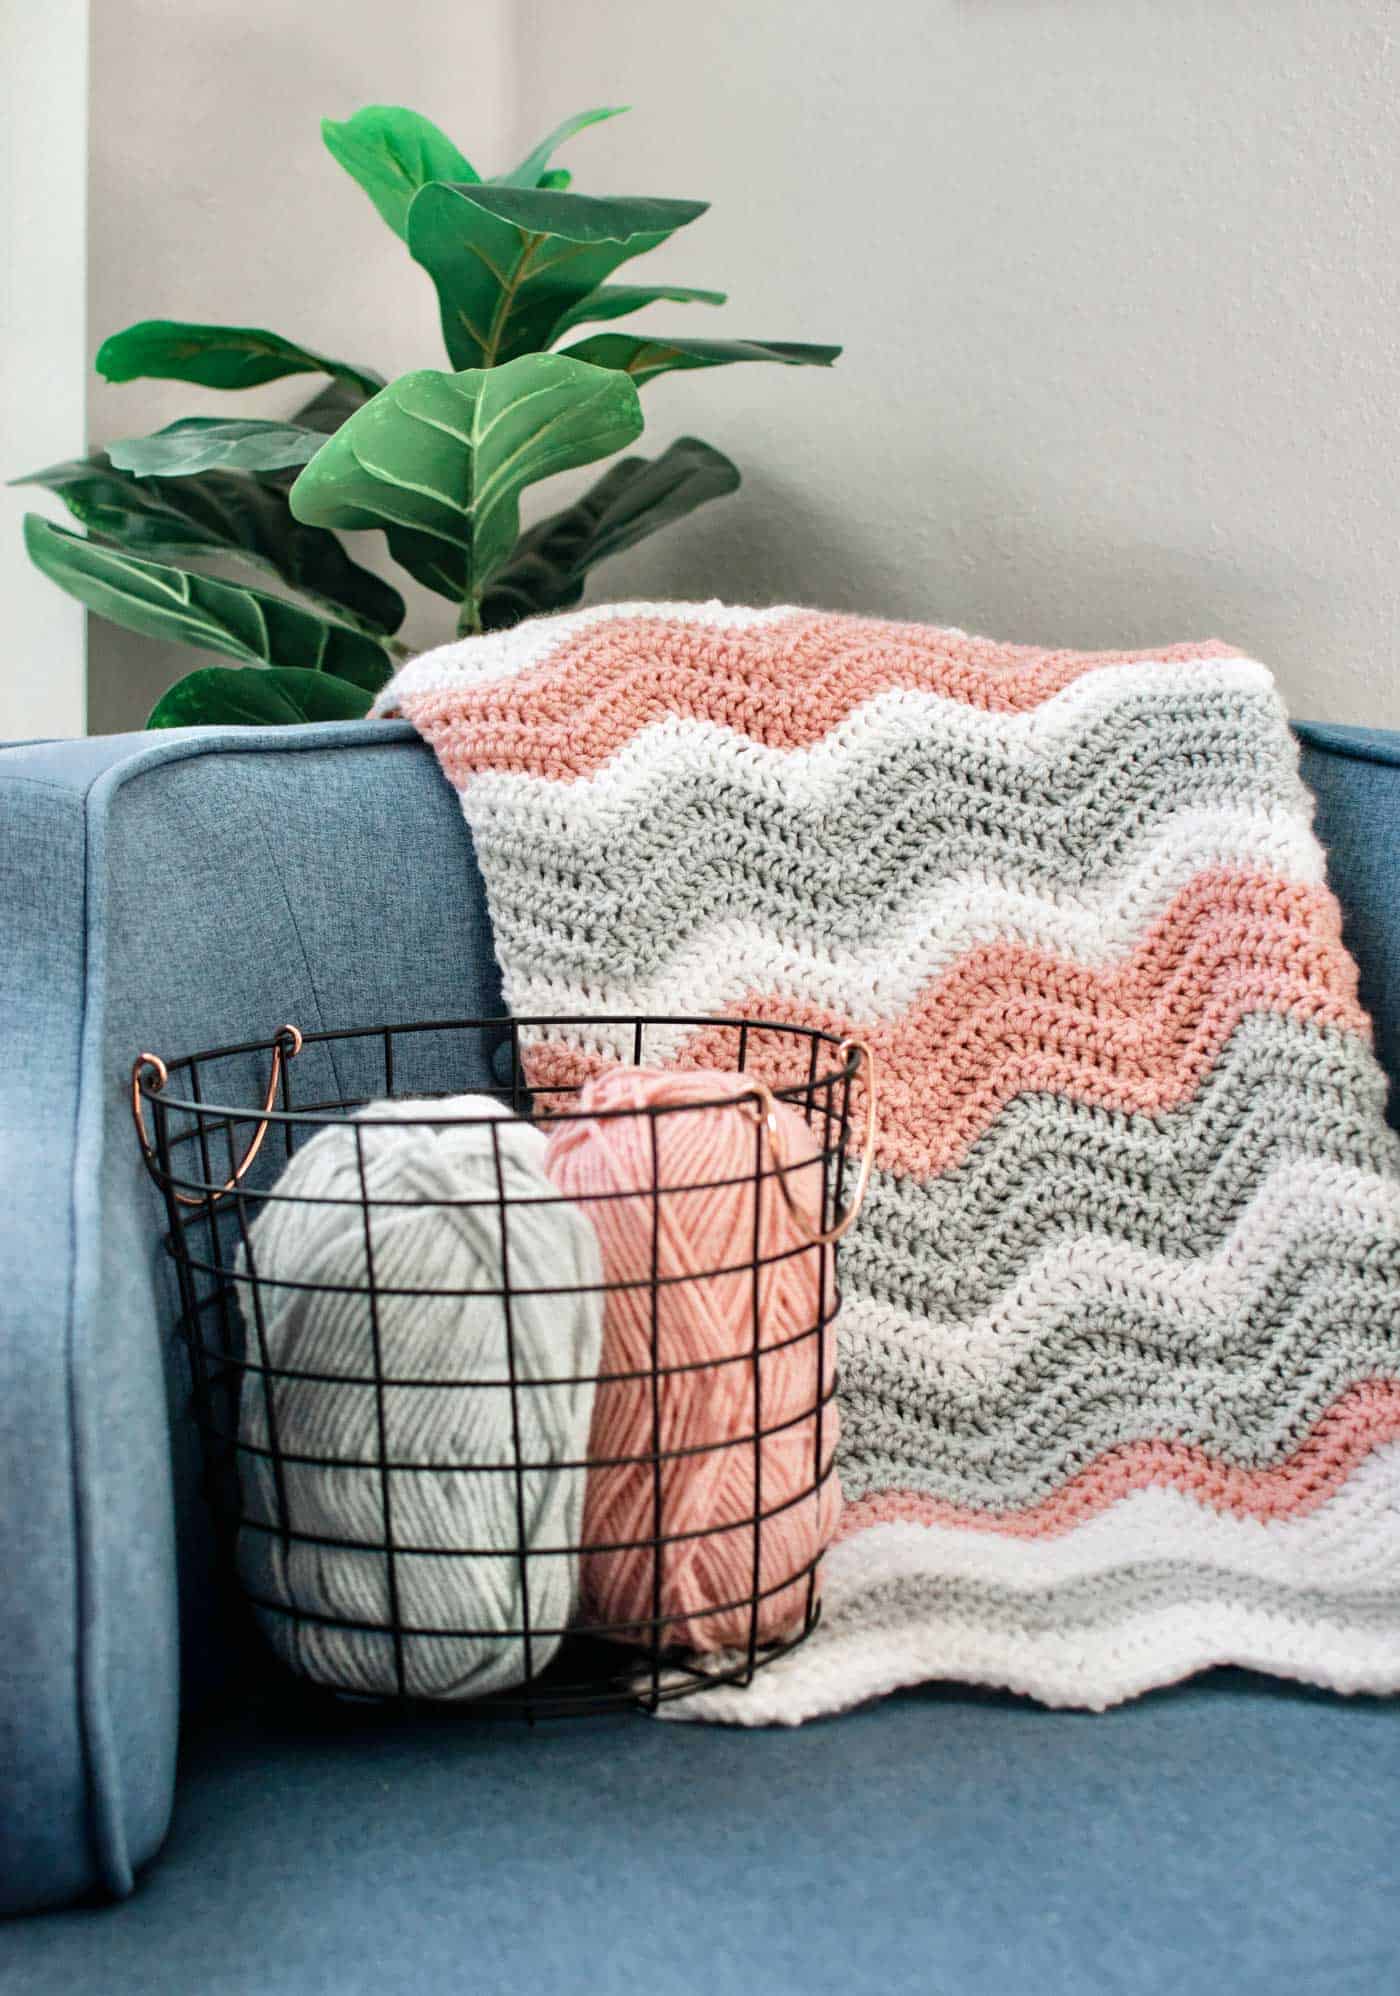 Ripple crochet blanket and yarn